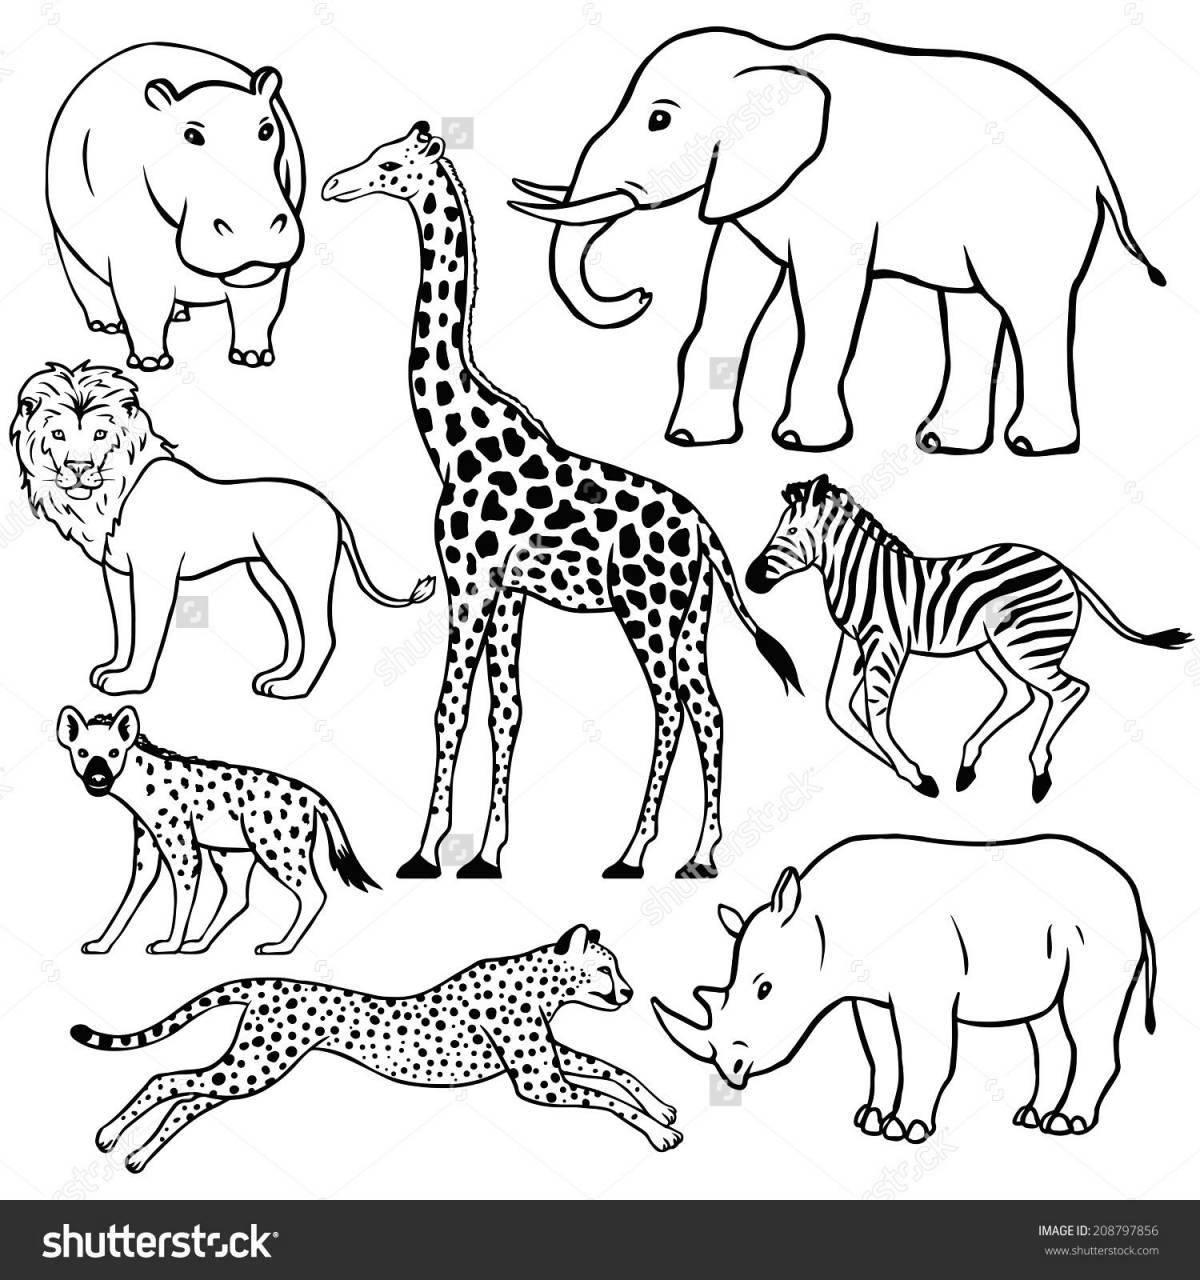 Colorful savanna animal coloring page